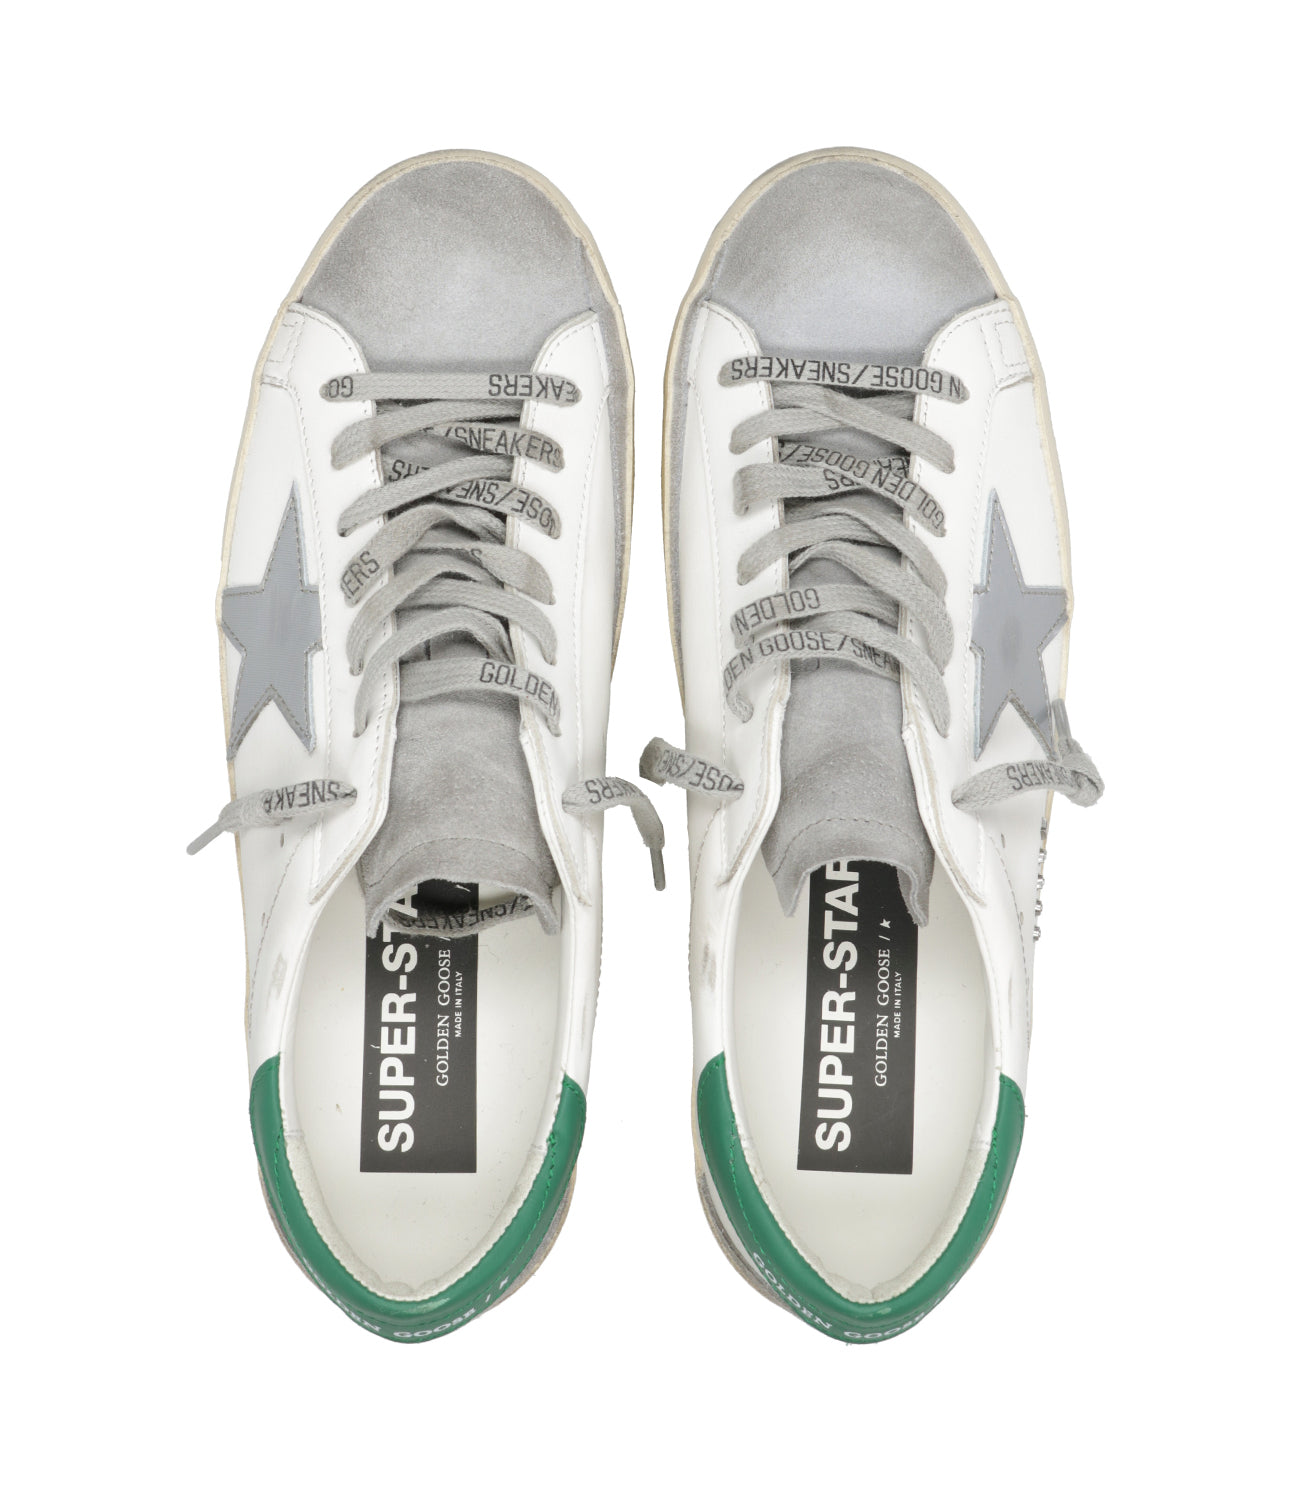 Golden Goose | Sneakers Super-Star Bianco e Verde